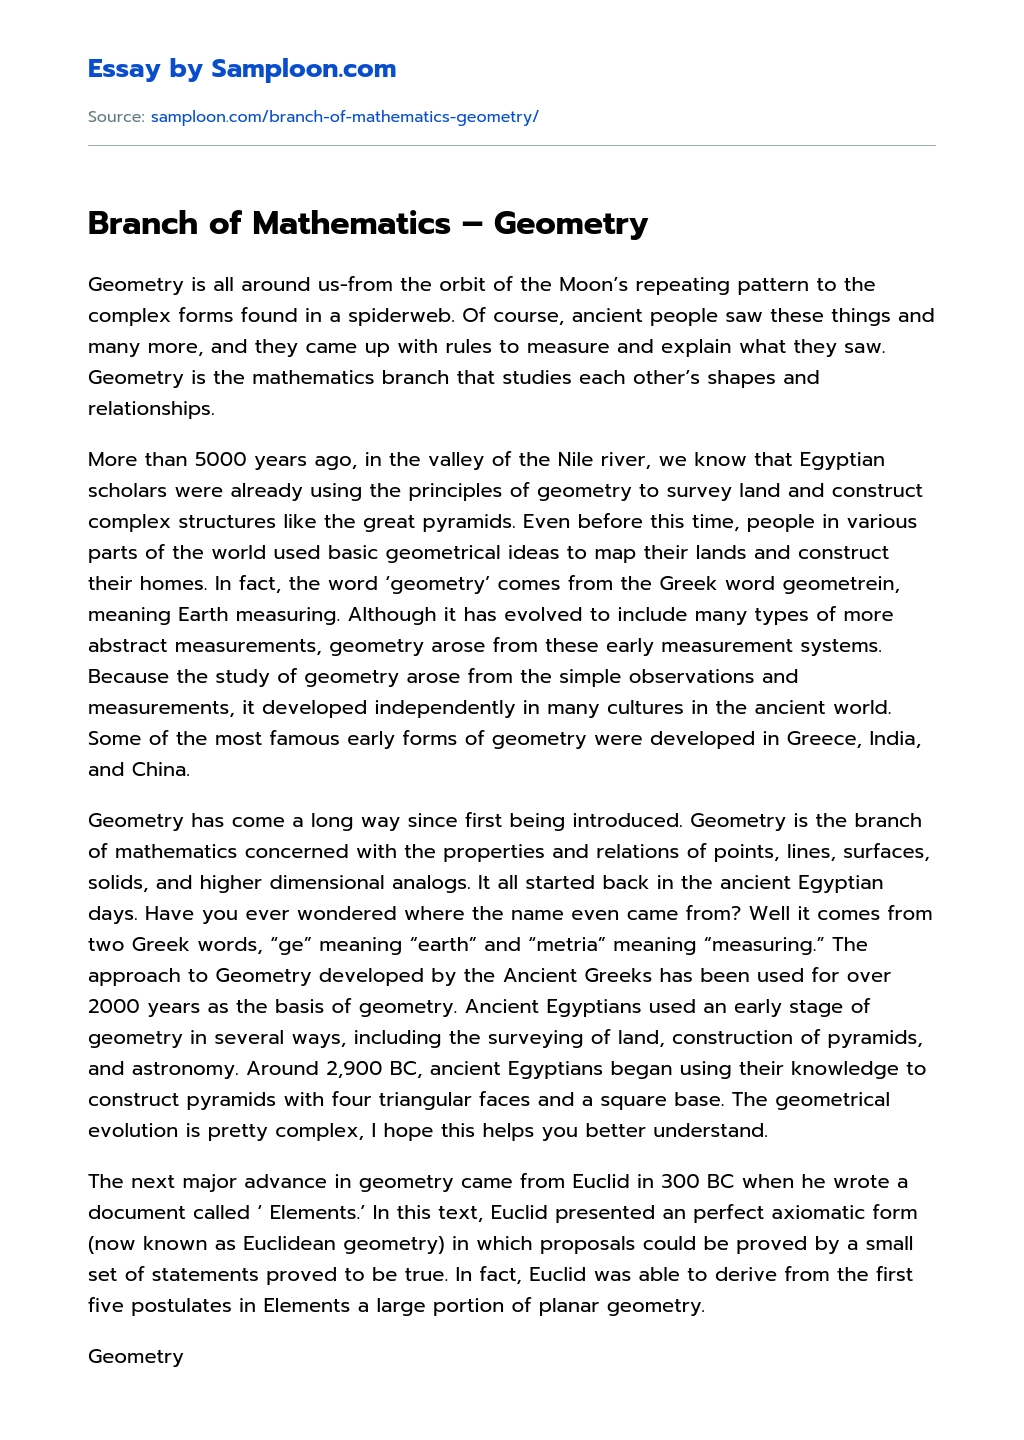 Branch of Mathematics – Geometry essay